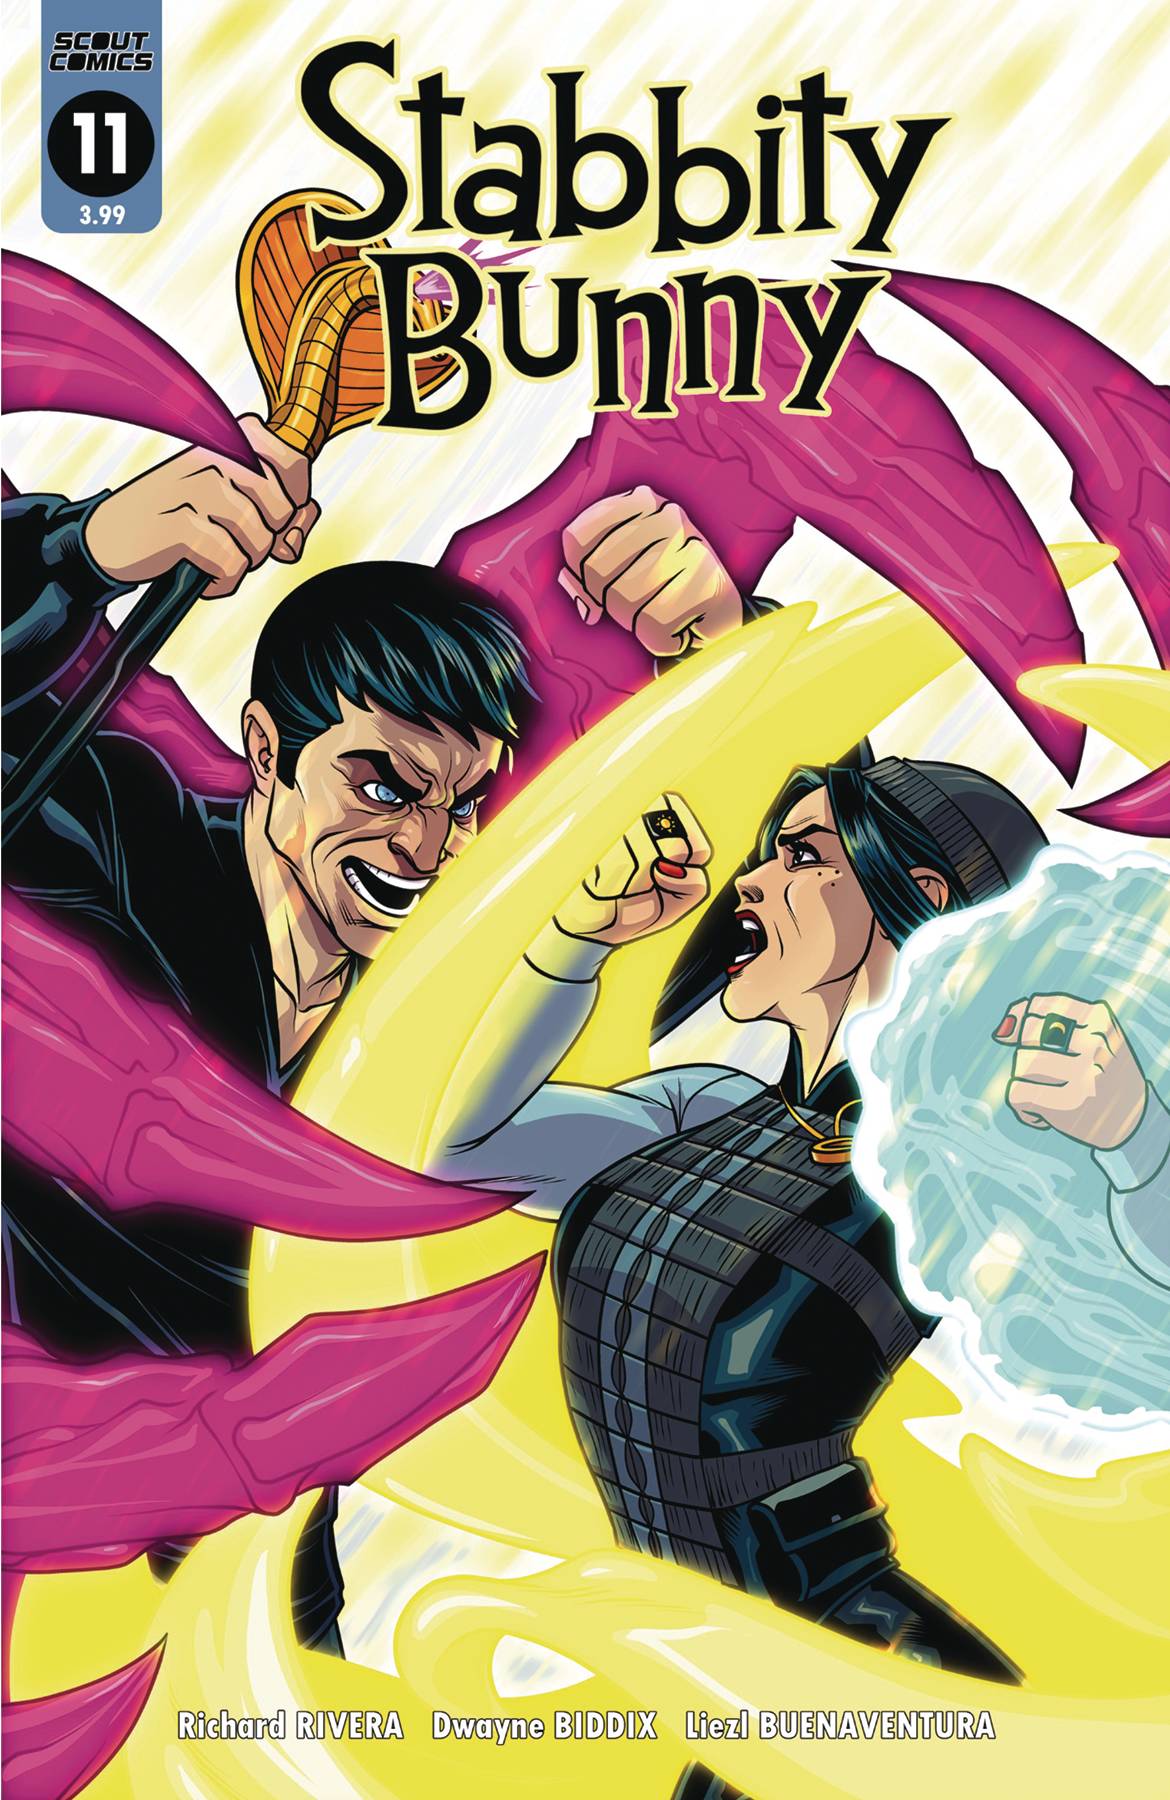 Stabbity Bunny #11 (2020)